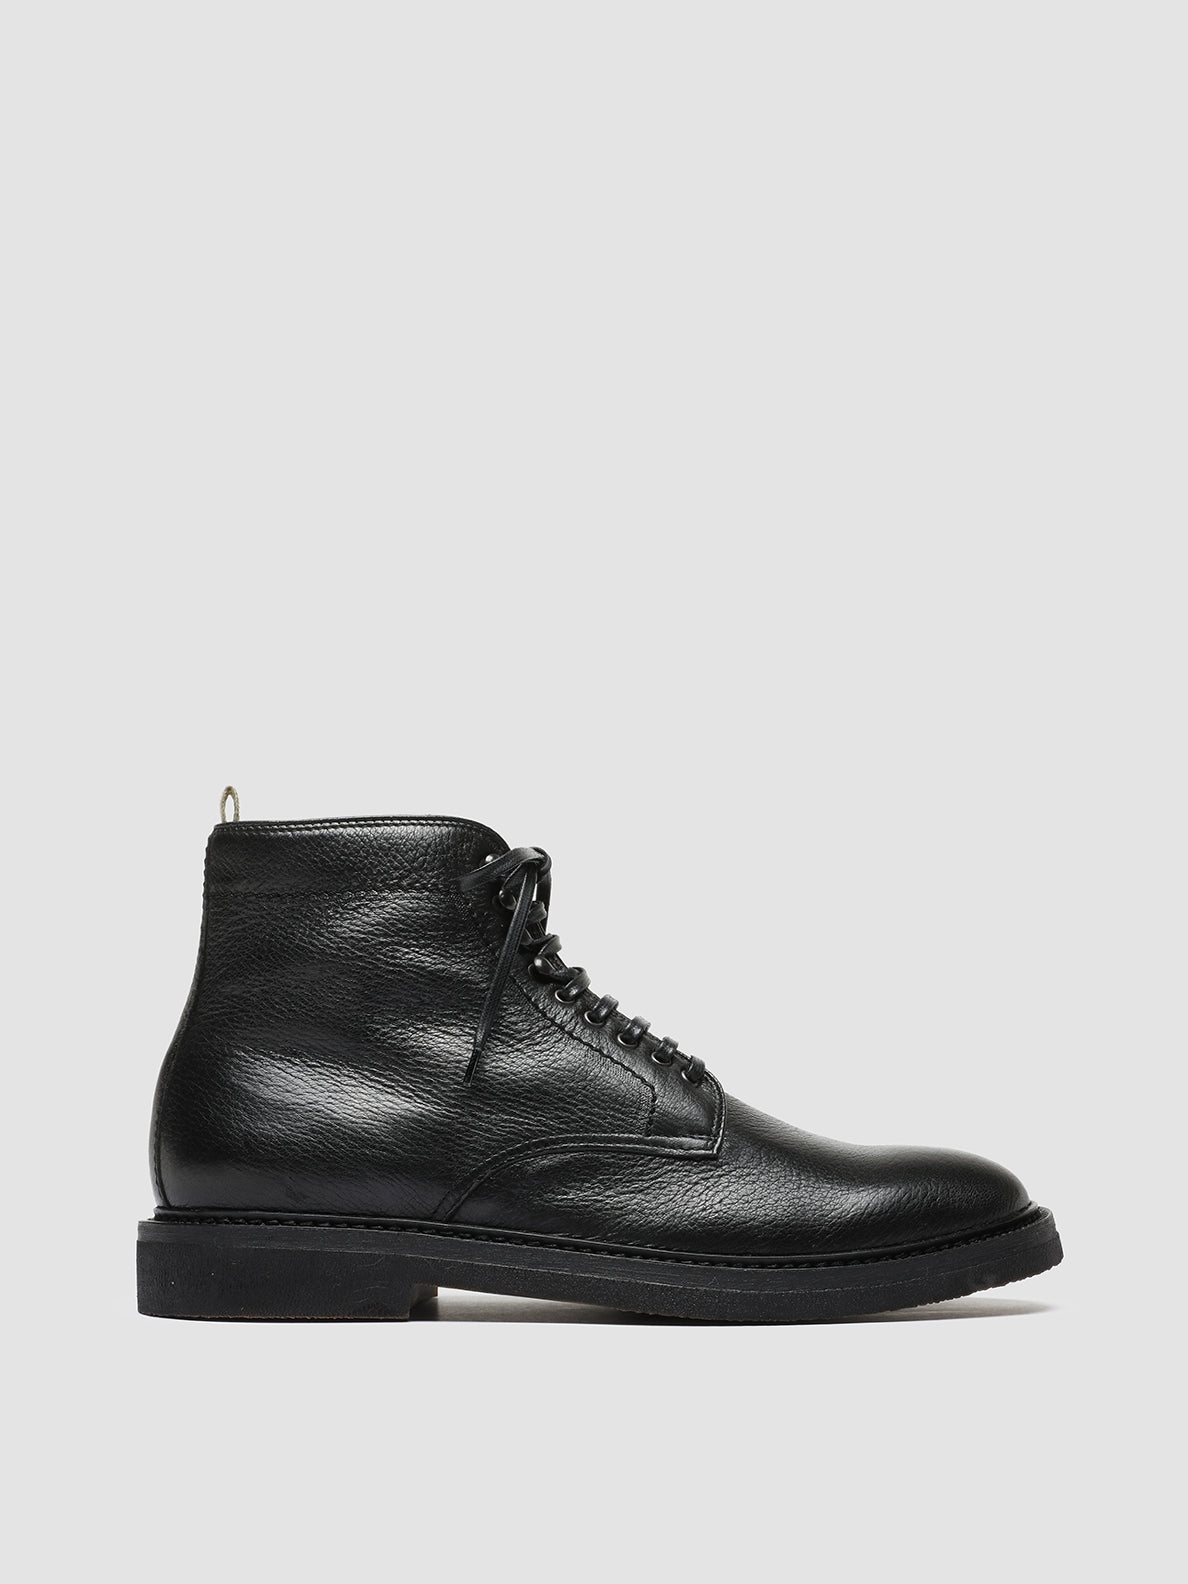 Mens Black Leather Boots HOPKINS FLEXI 203 – Officine Creative